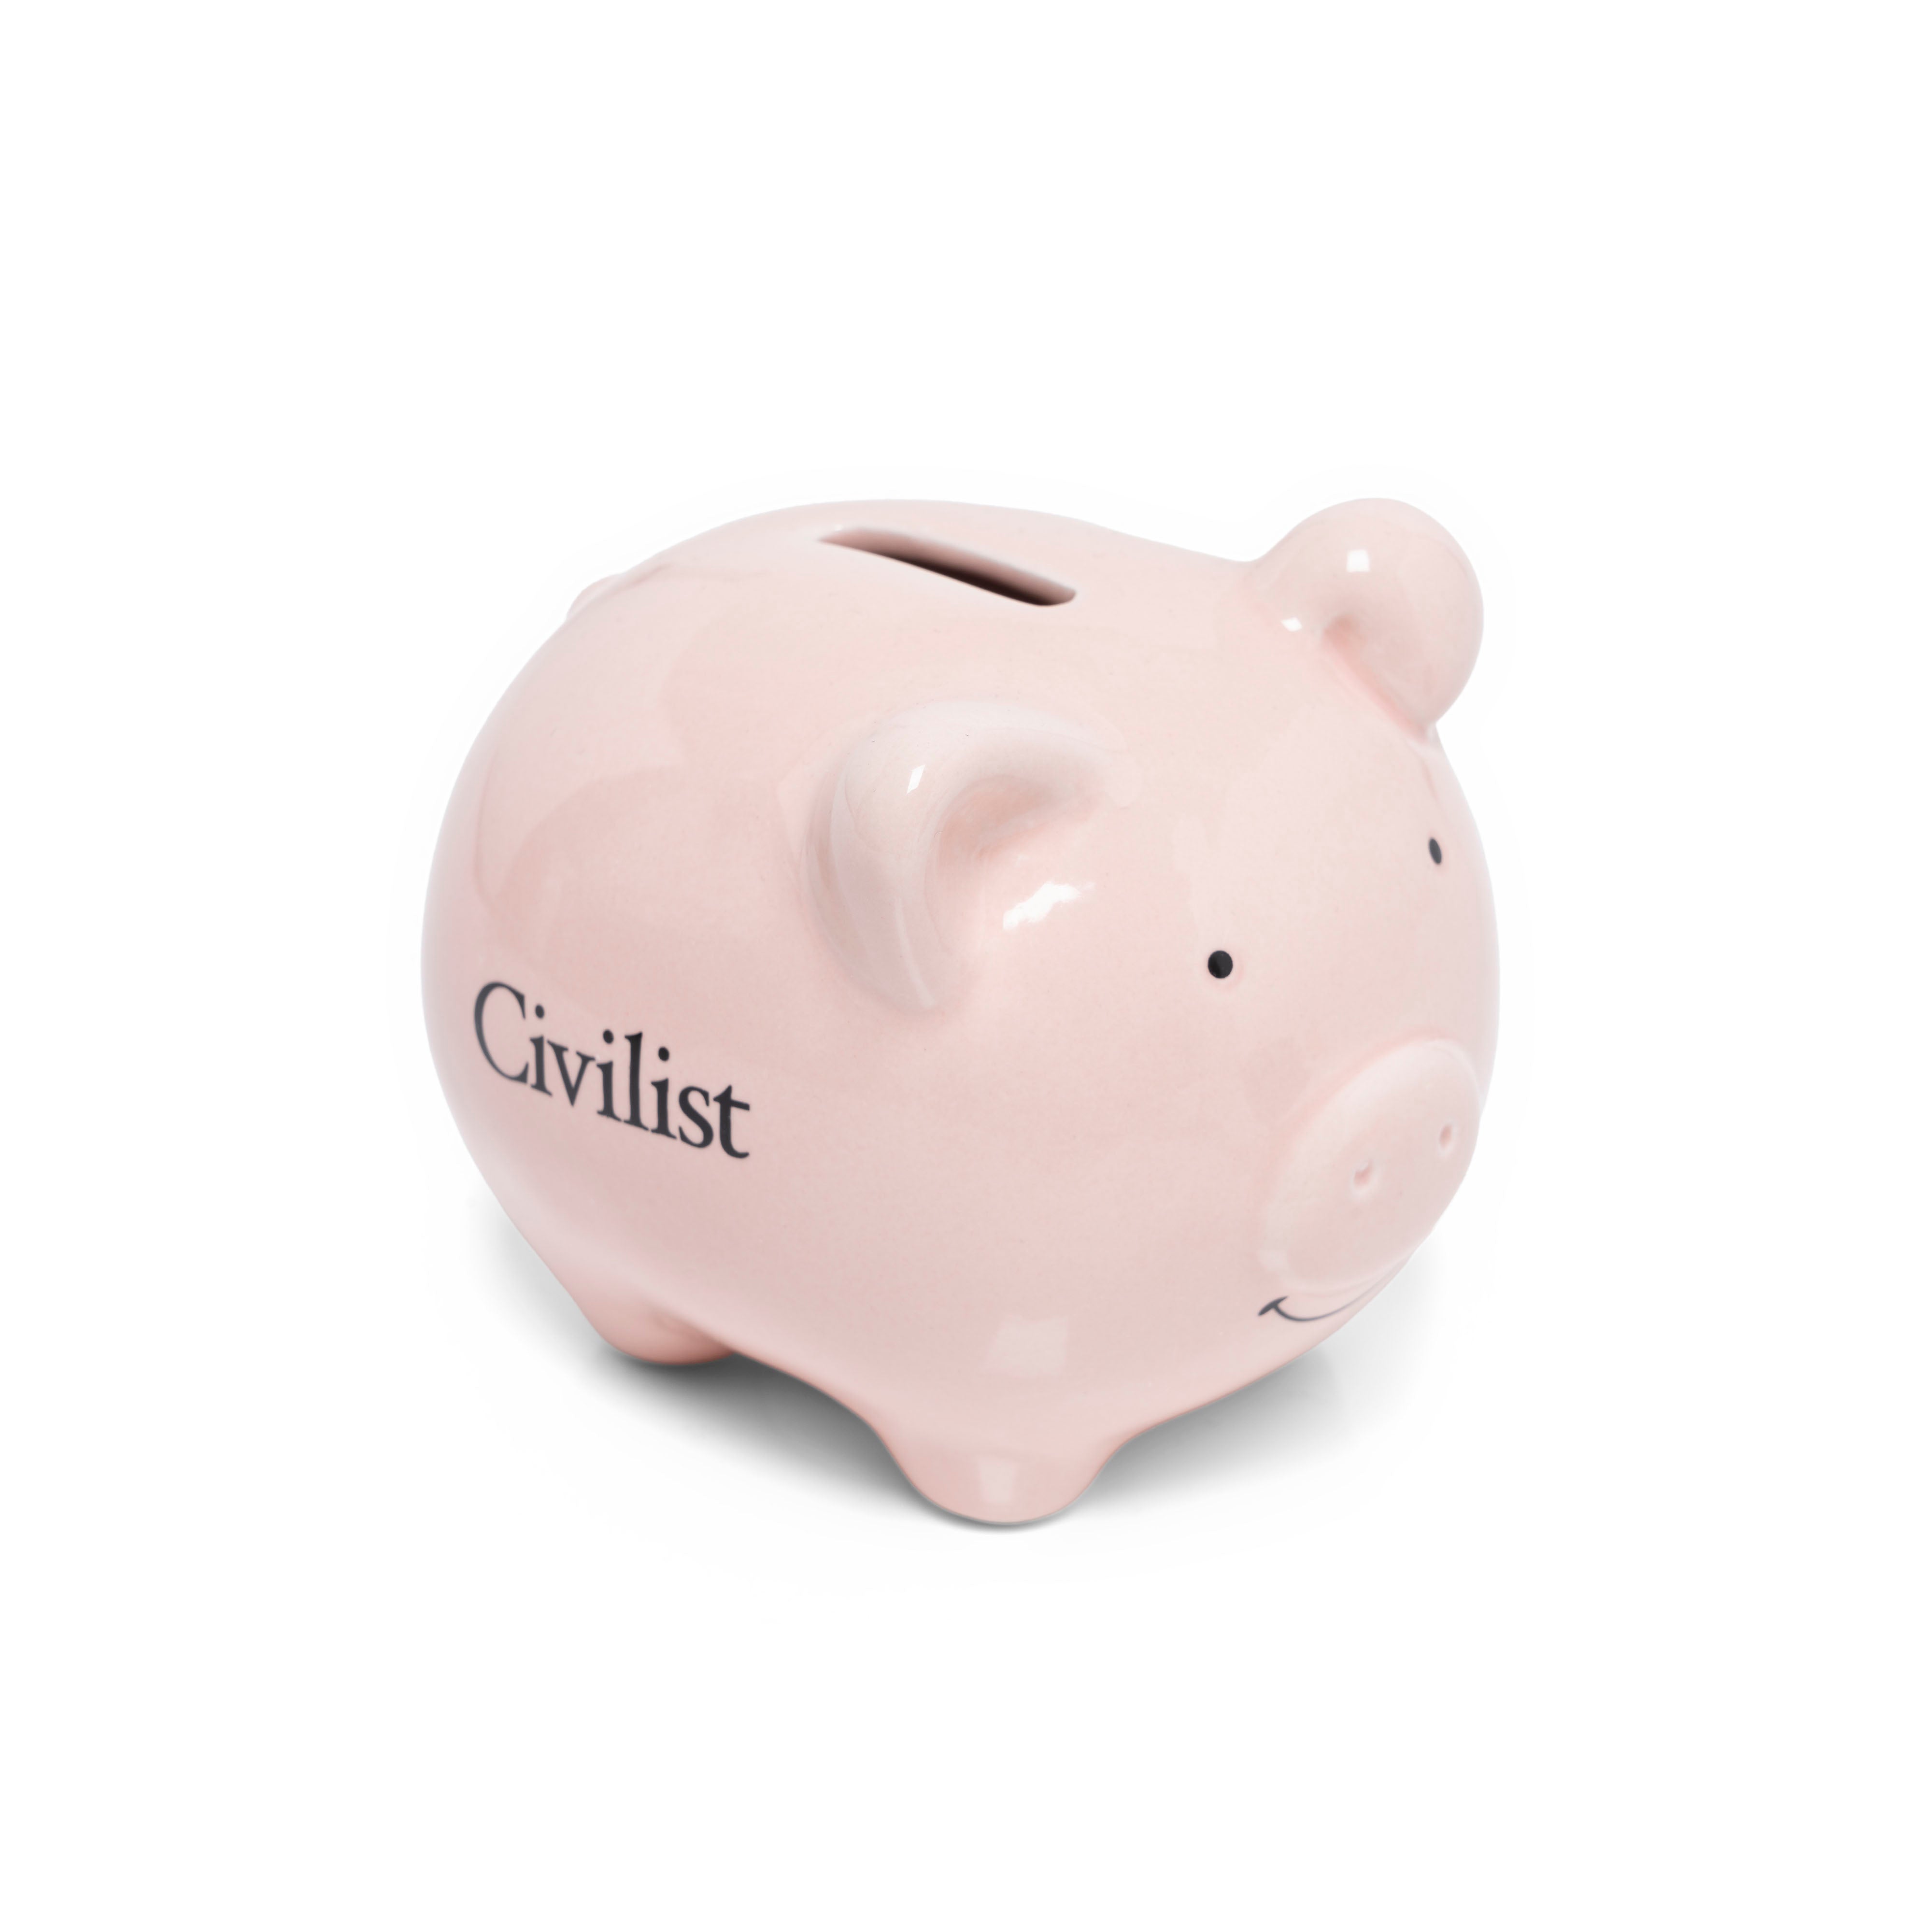 Civilist Piggy Bank - Pink